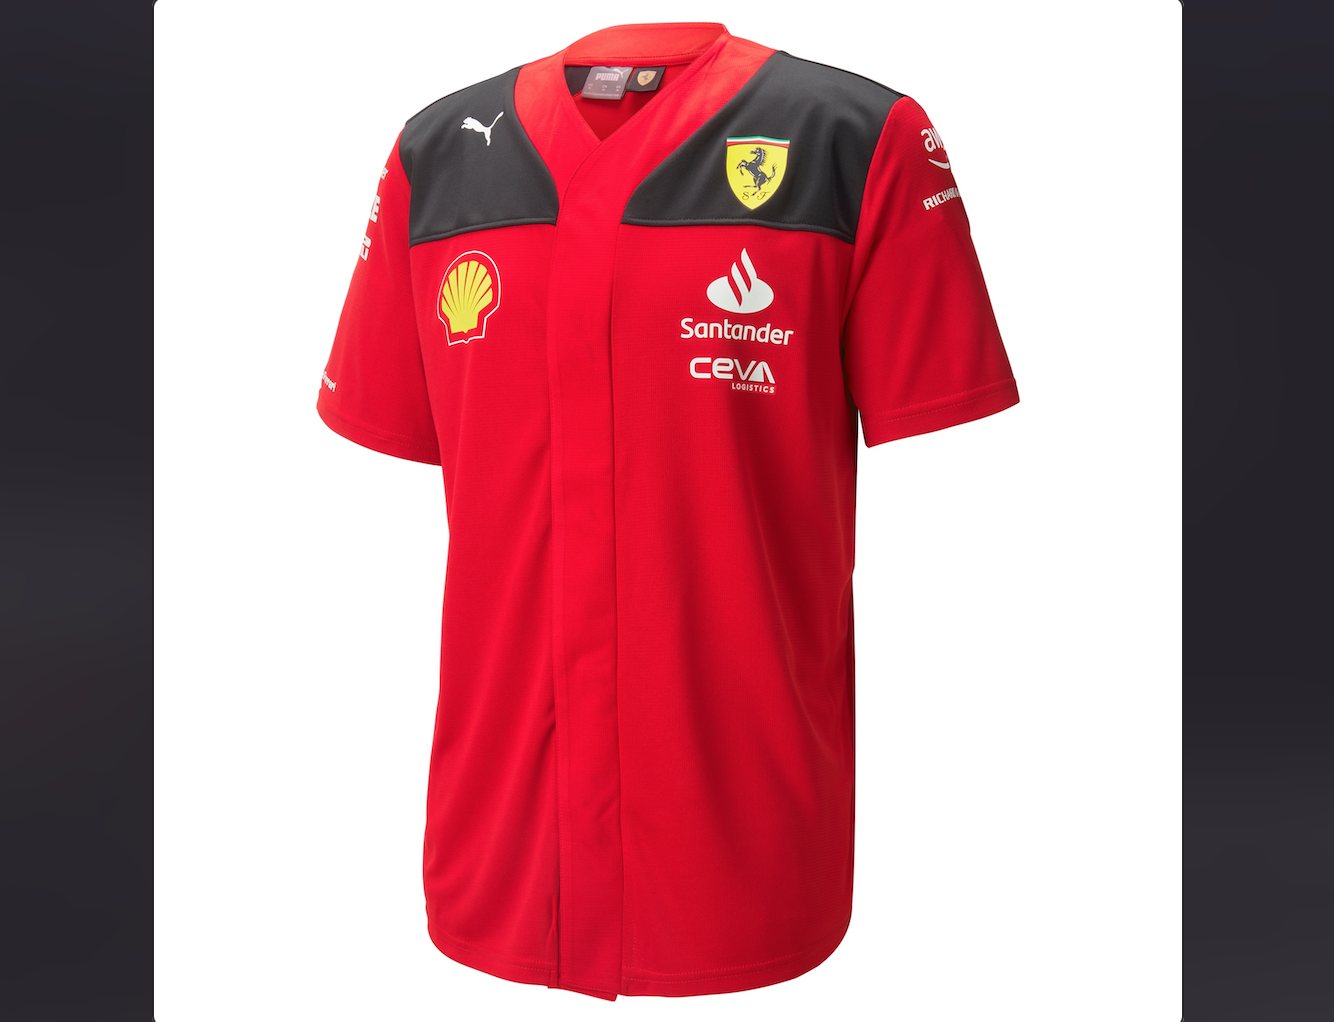 PUMA and Scuderia Ferrari release replica baseball jersey